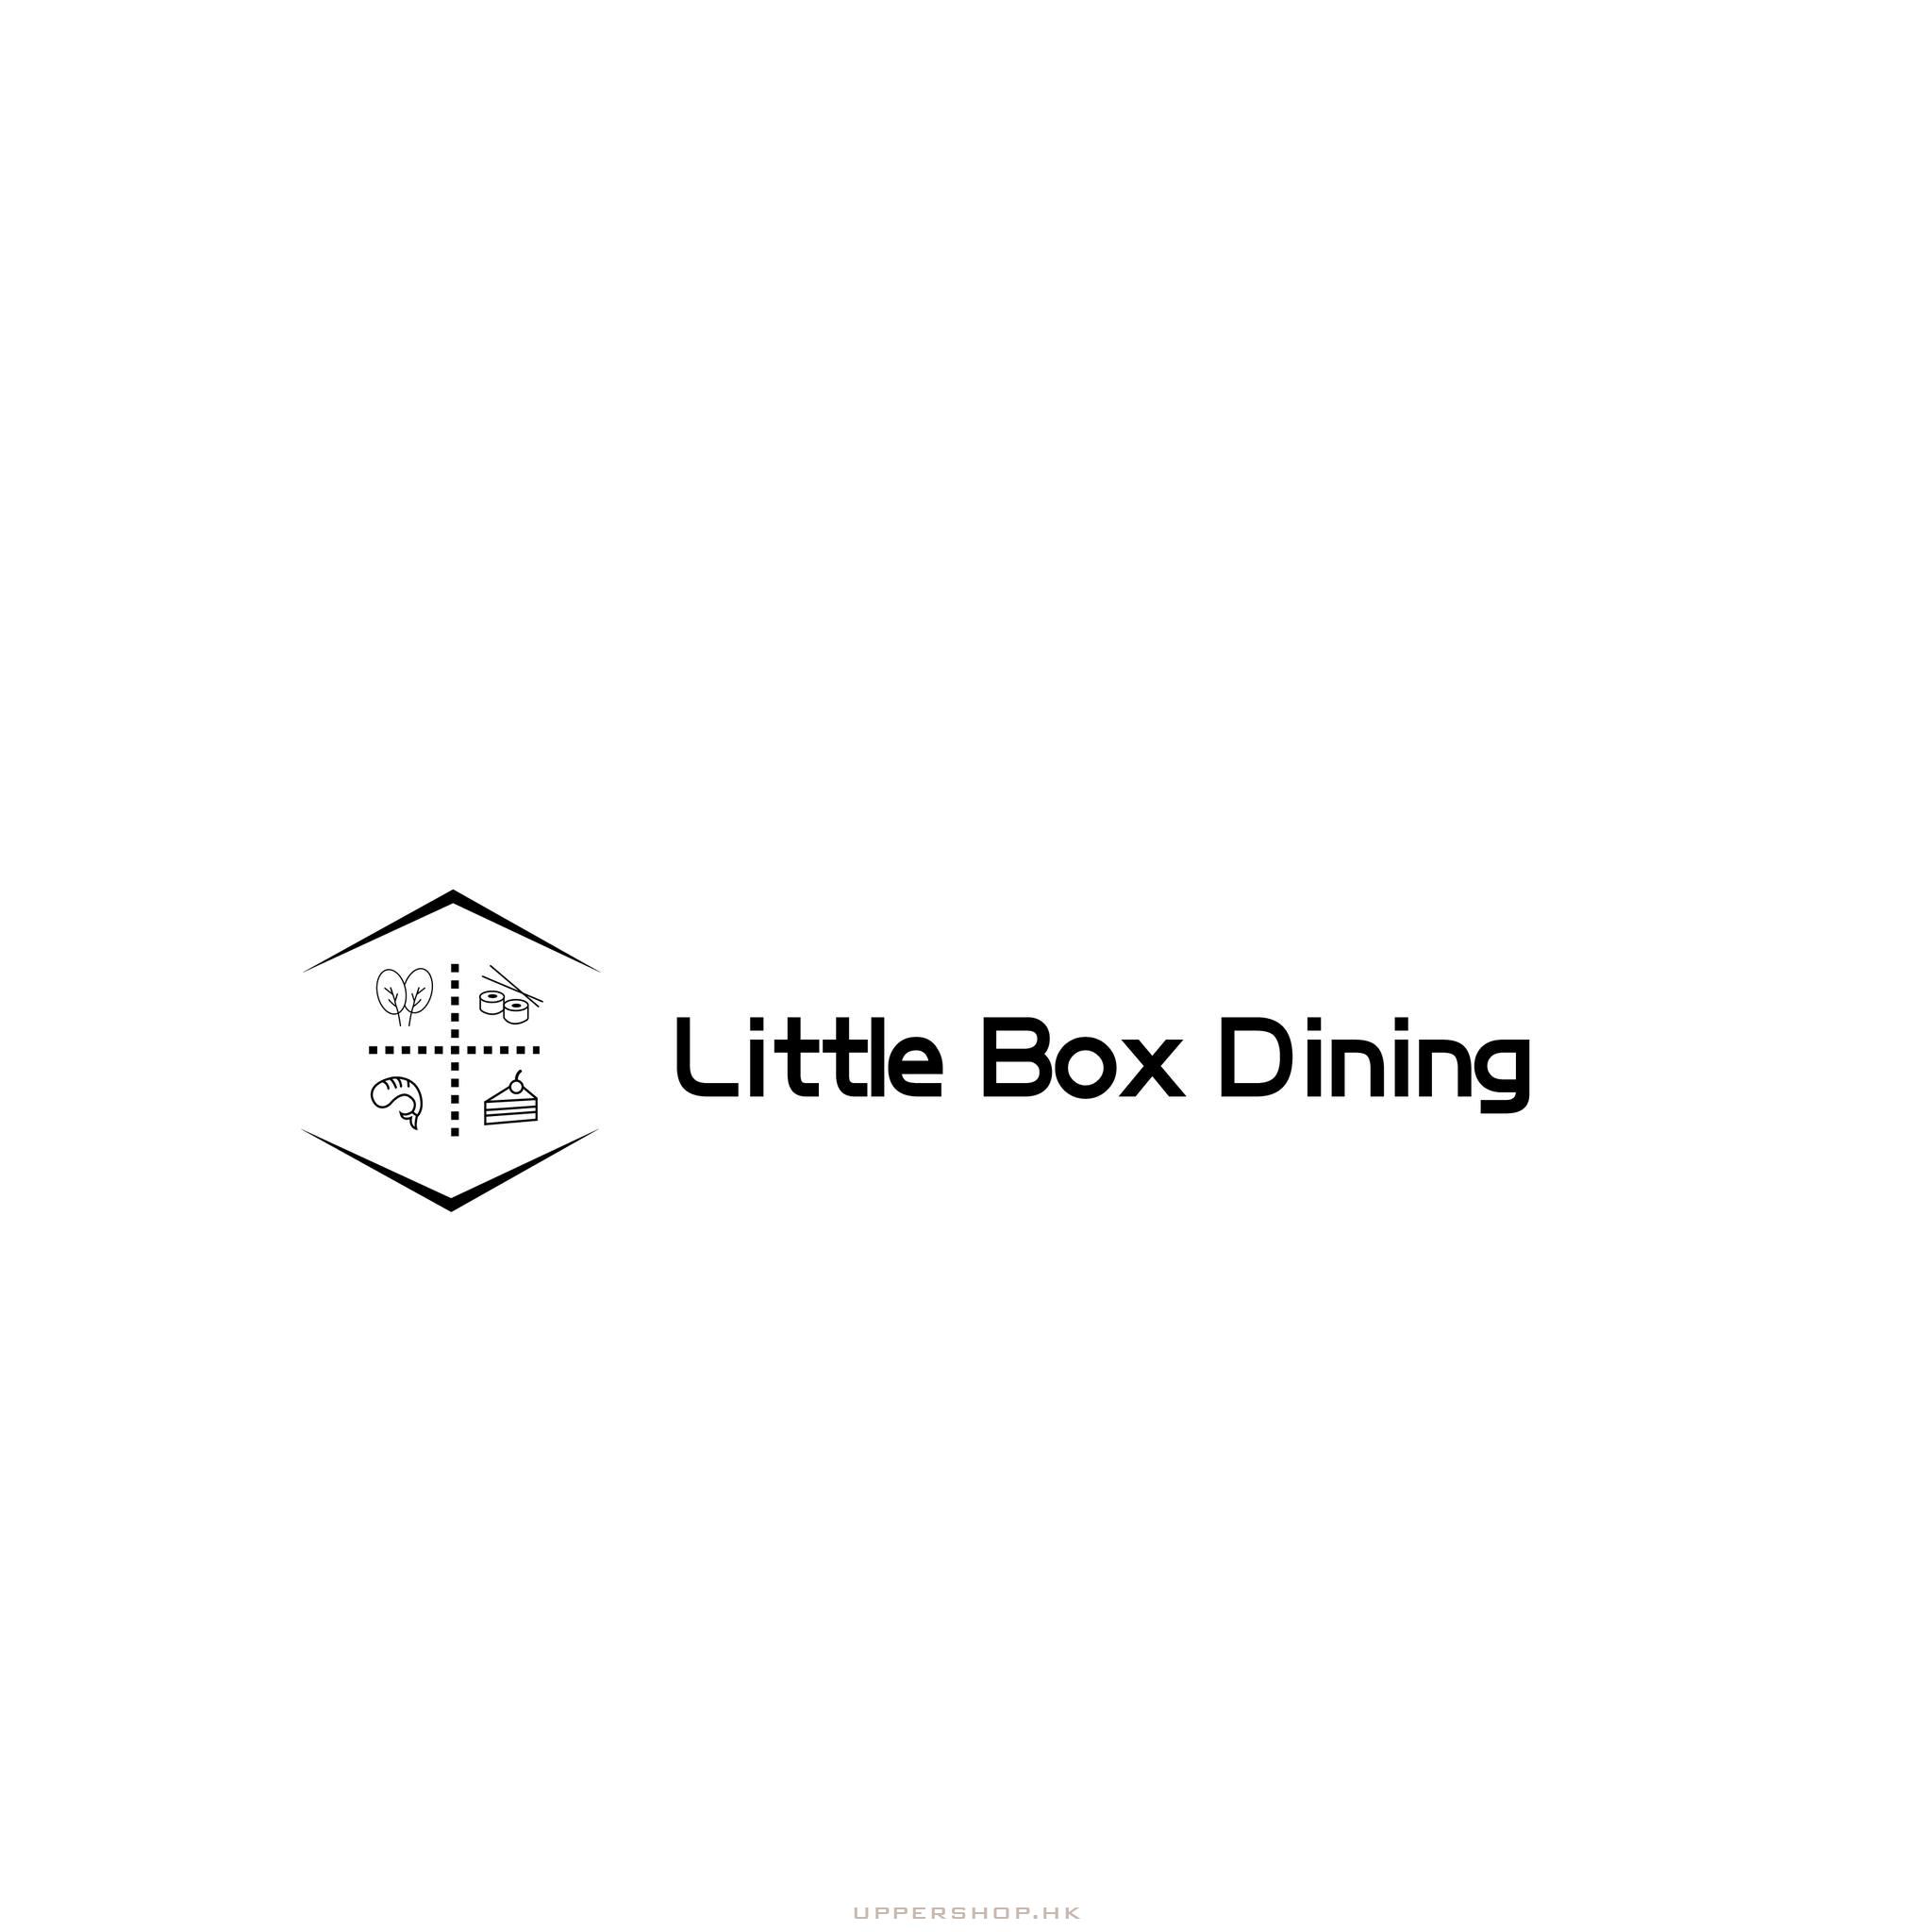 Little Box Dining